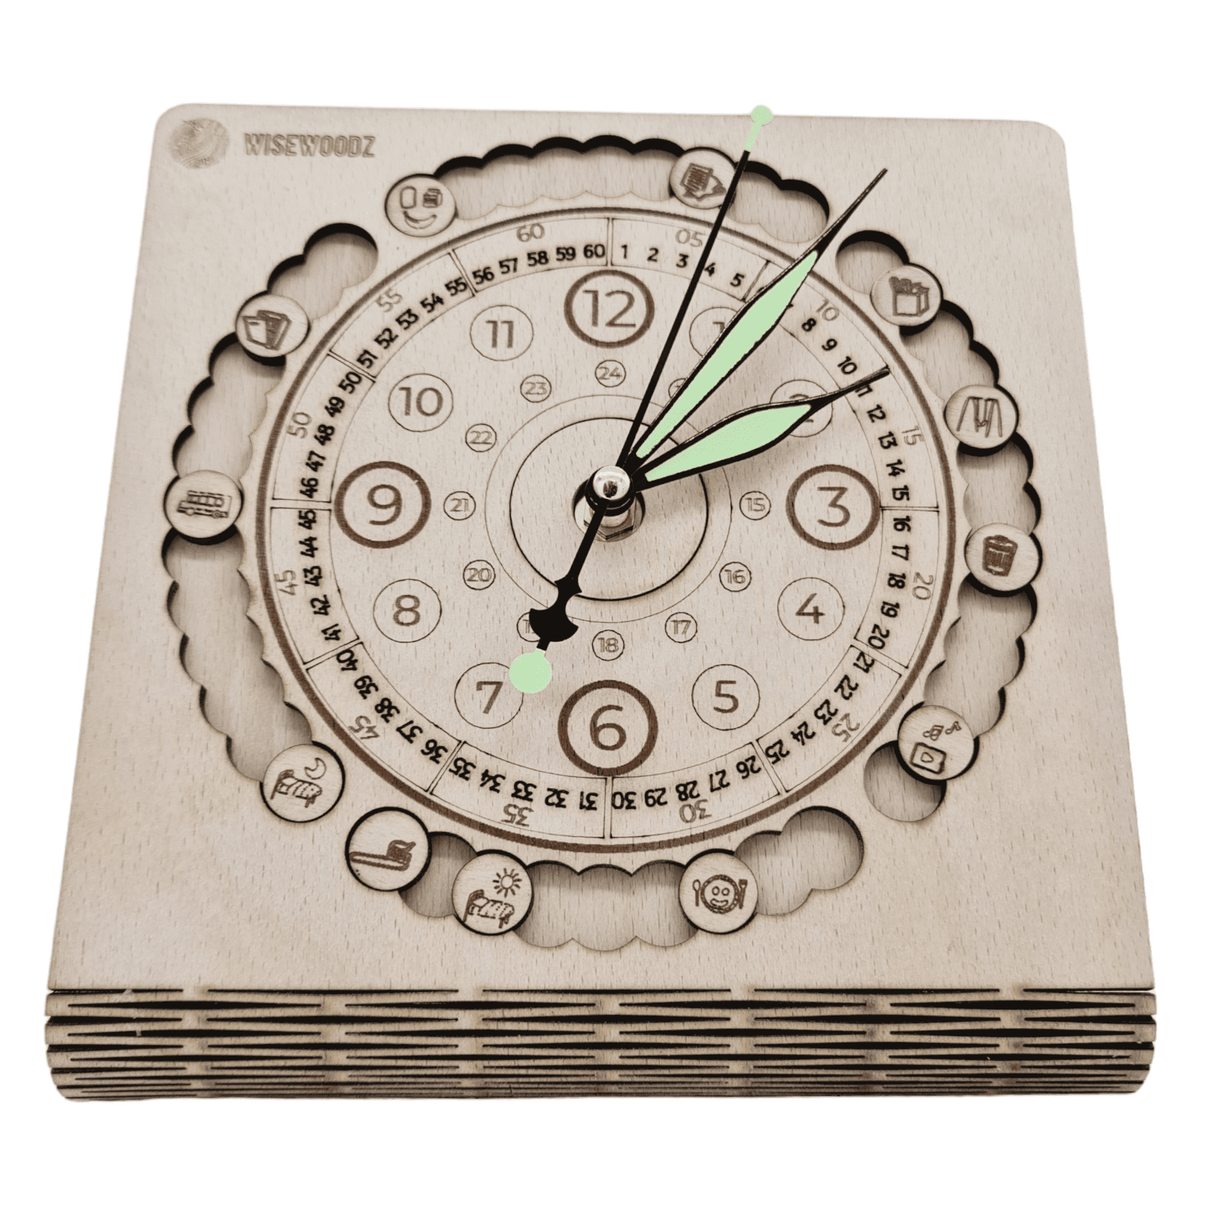 Wisewoodz Time Master Clock